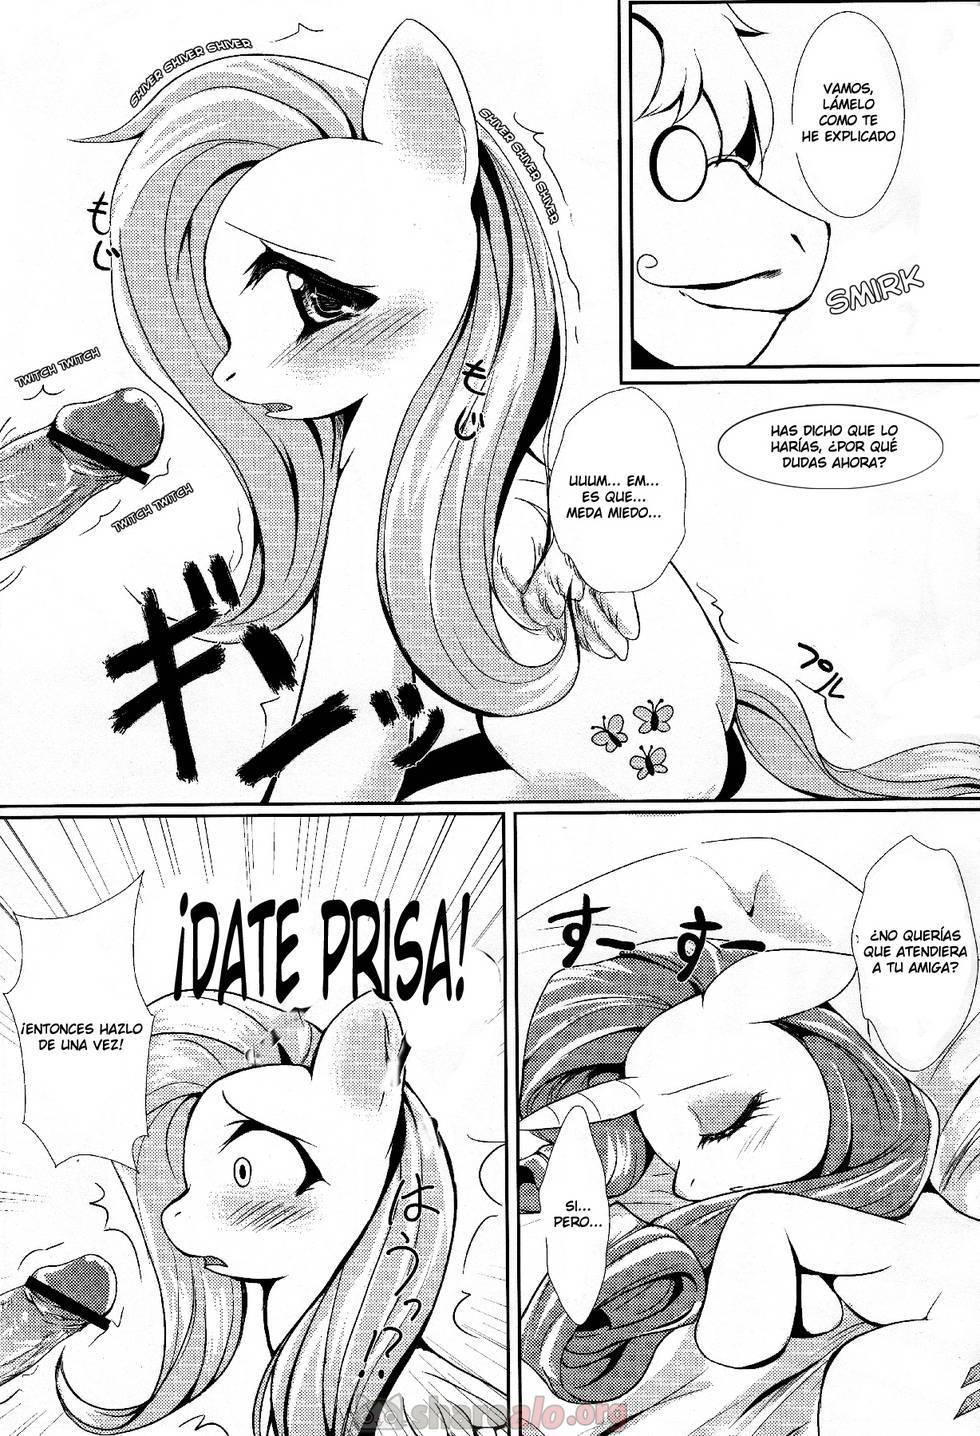 Beautiful Ponies - 2 - Comics Porno - Hentai Manga - Cartoon XXX